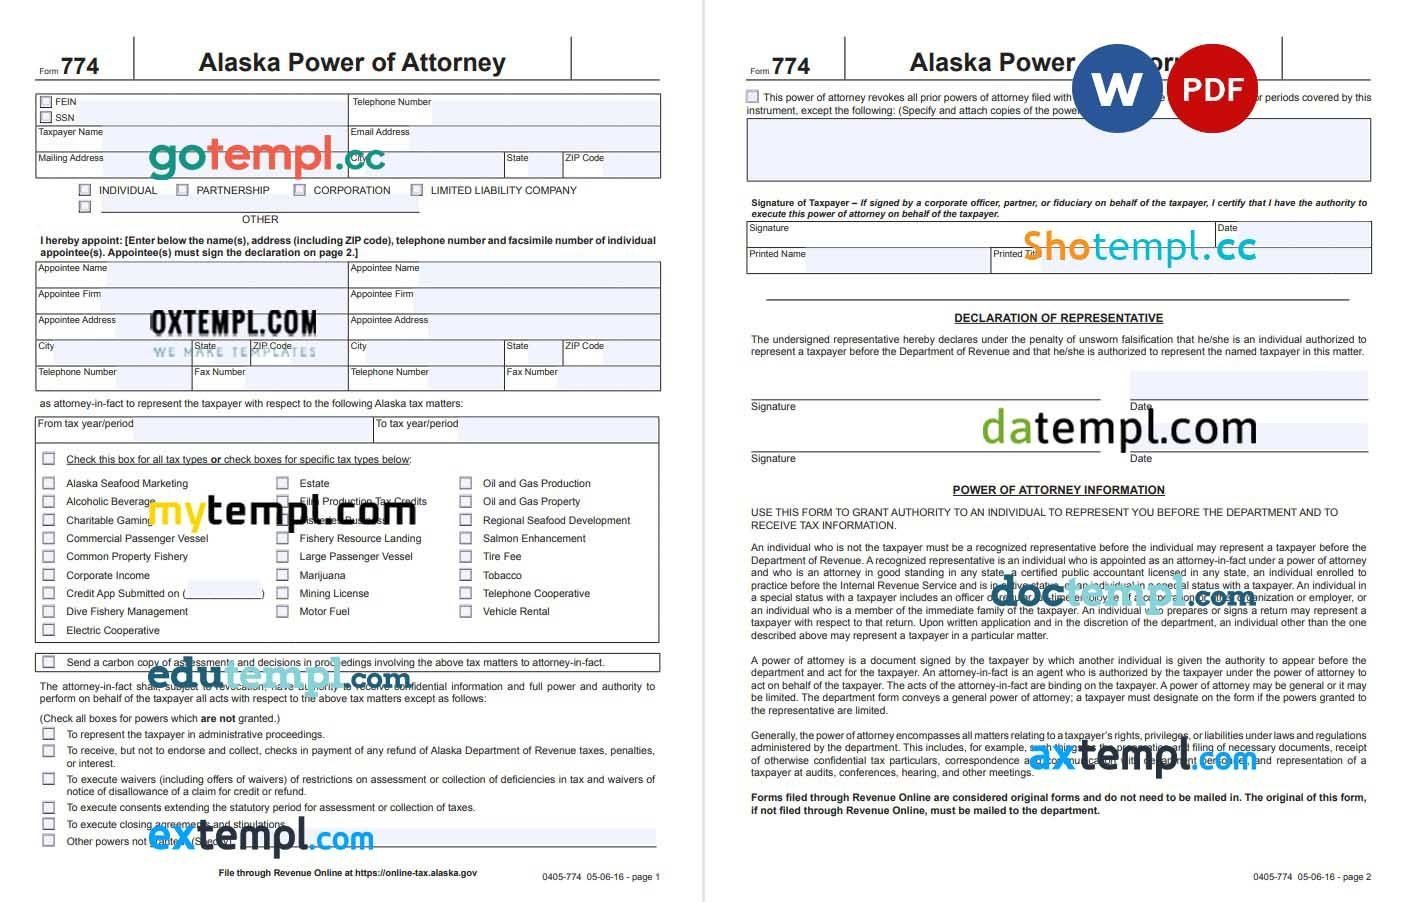 Alaska Tax Power of Attorney Form example, fully editable